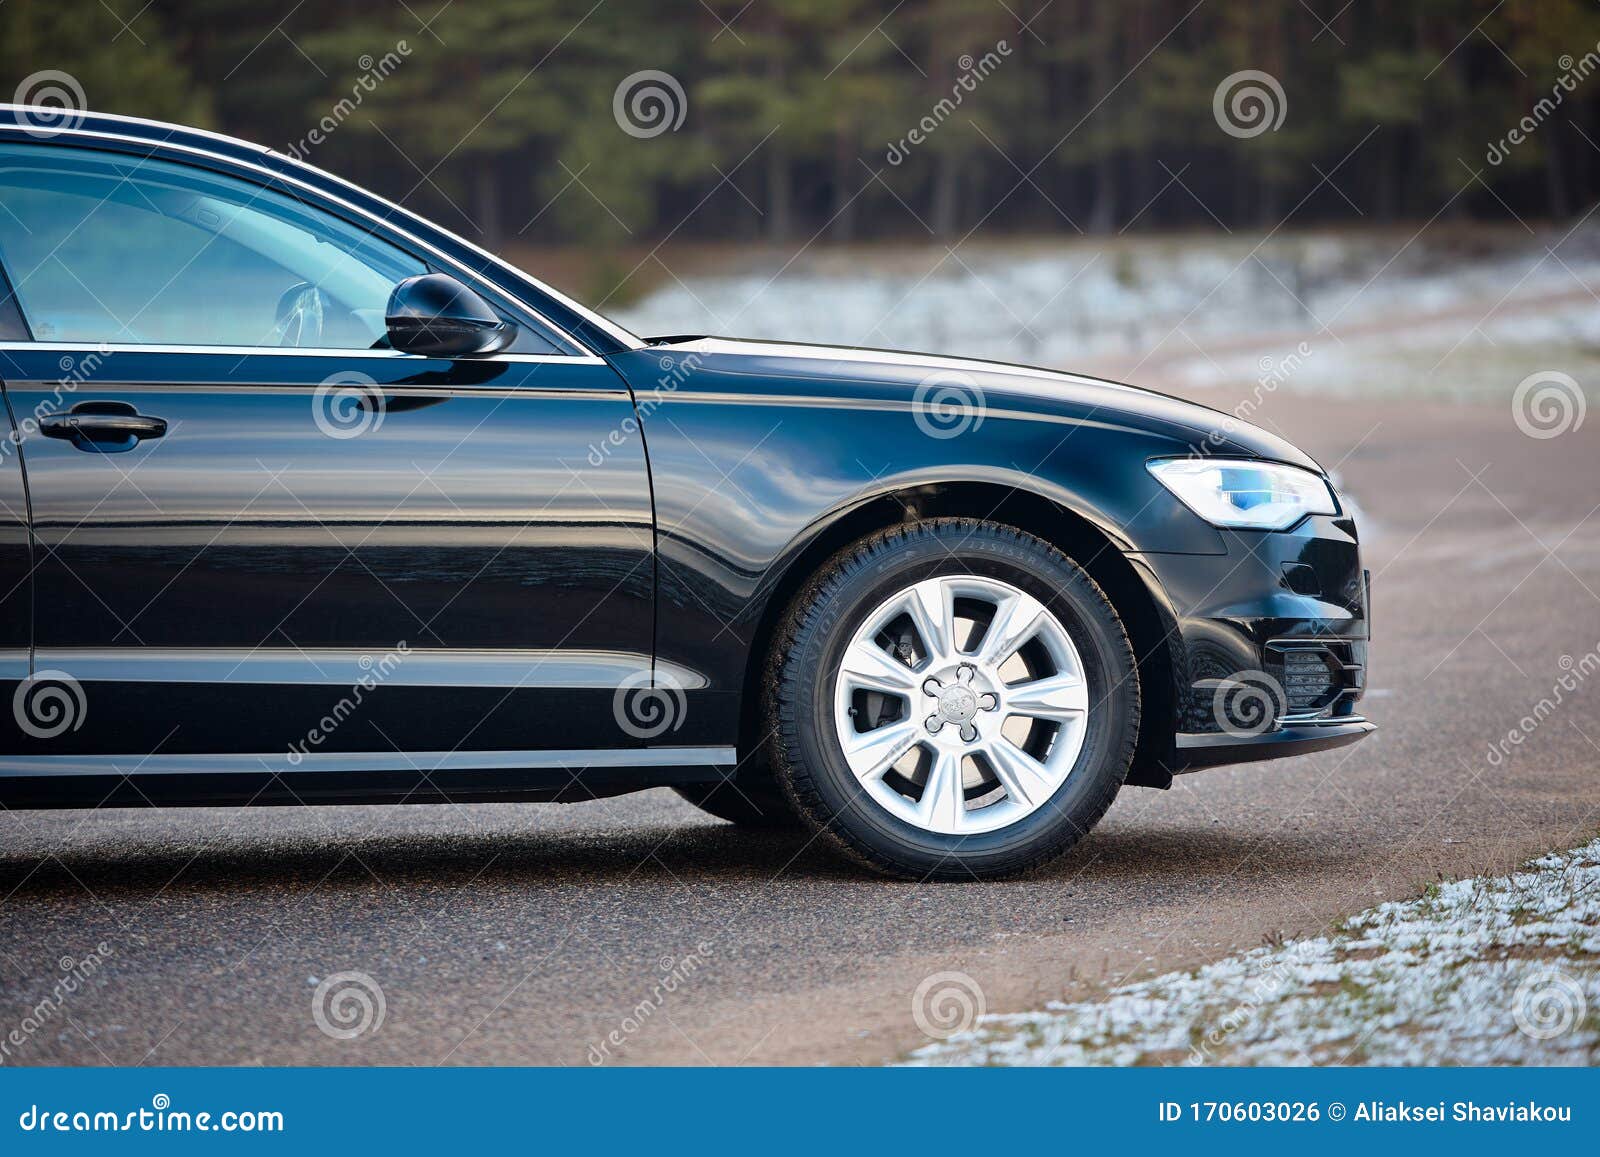 GRODNO, BELARUS - DECEMBER 2019: Audi A6 4G, C7 2.0 TDI 190 Hp